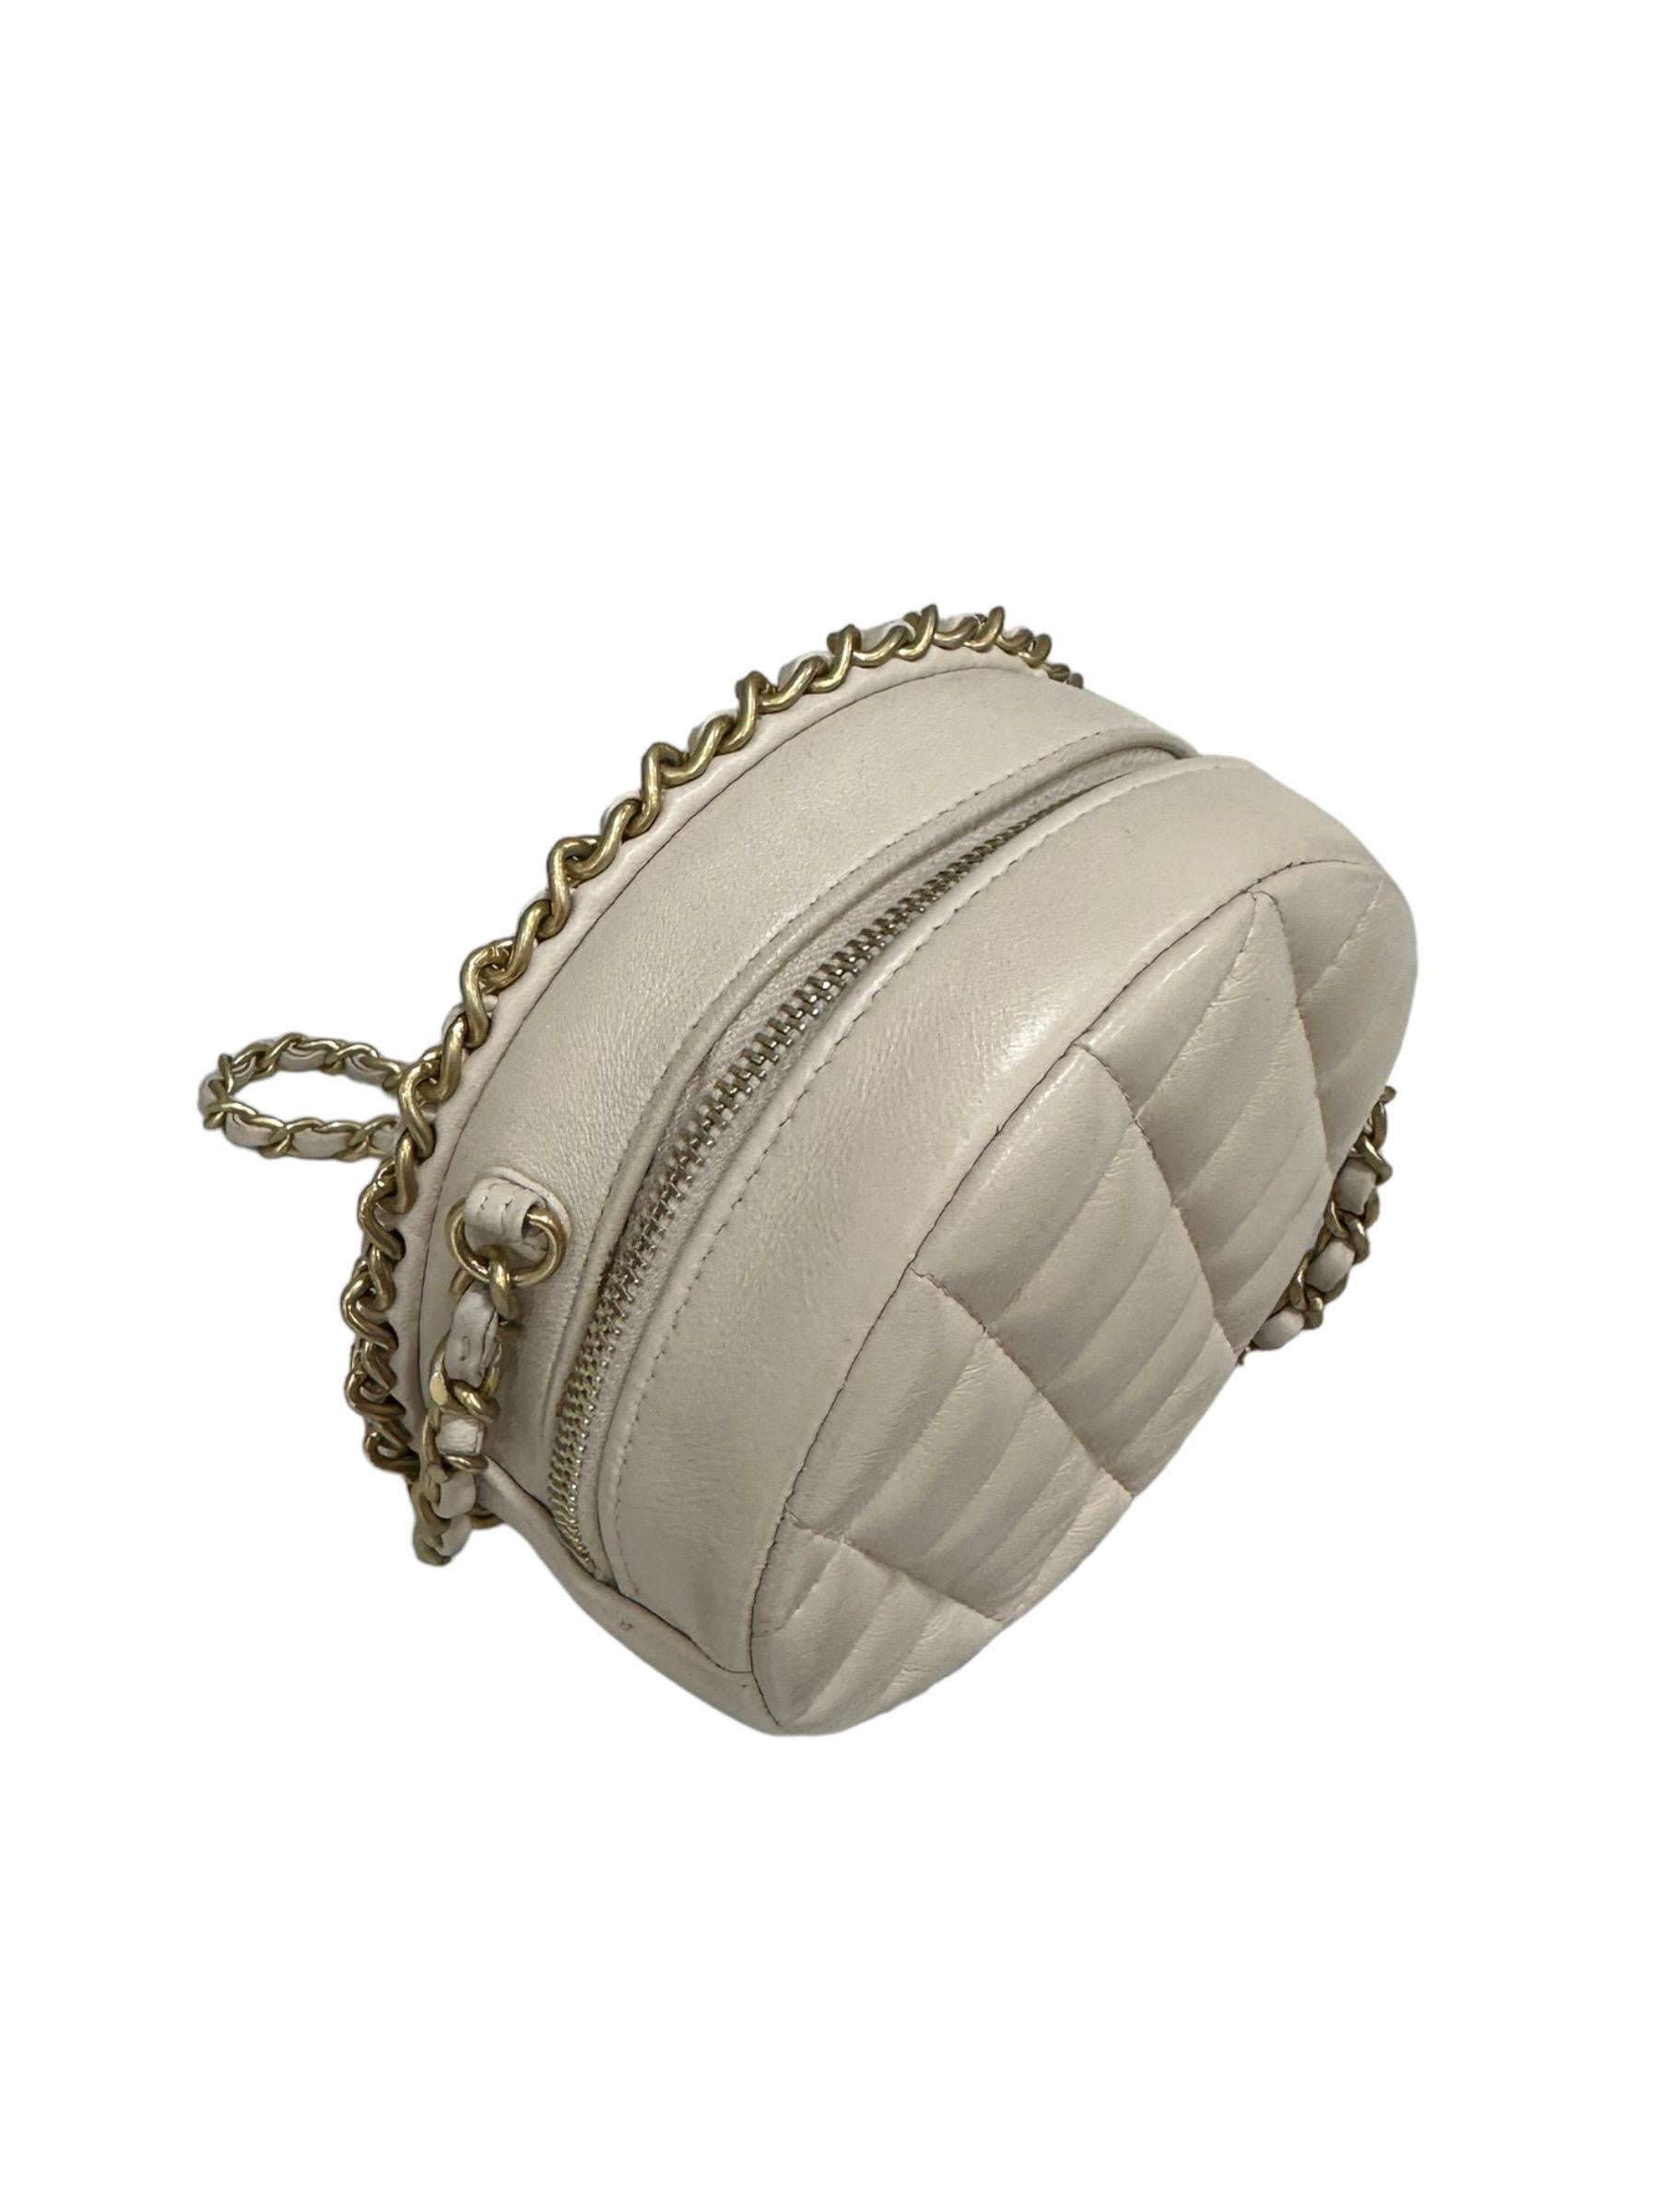 Borsa A Tracolla Chanel Round Bag Beige 2020 For Sale 1